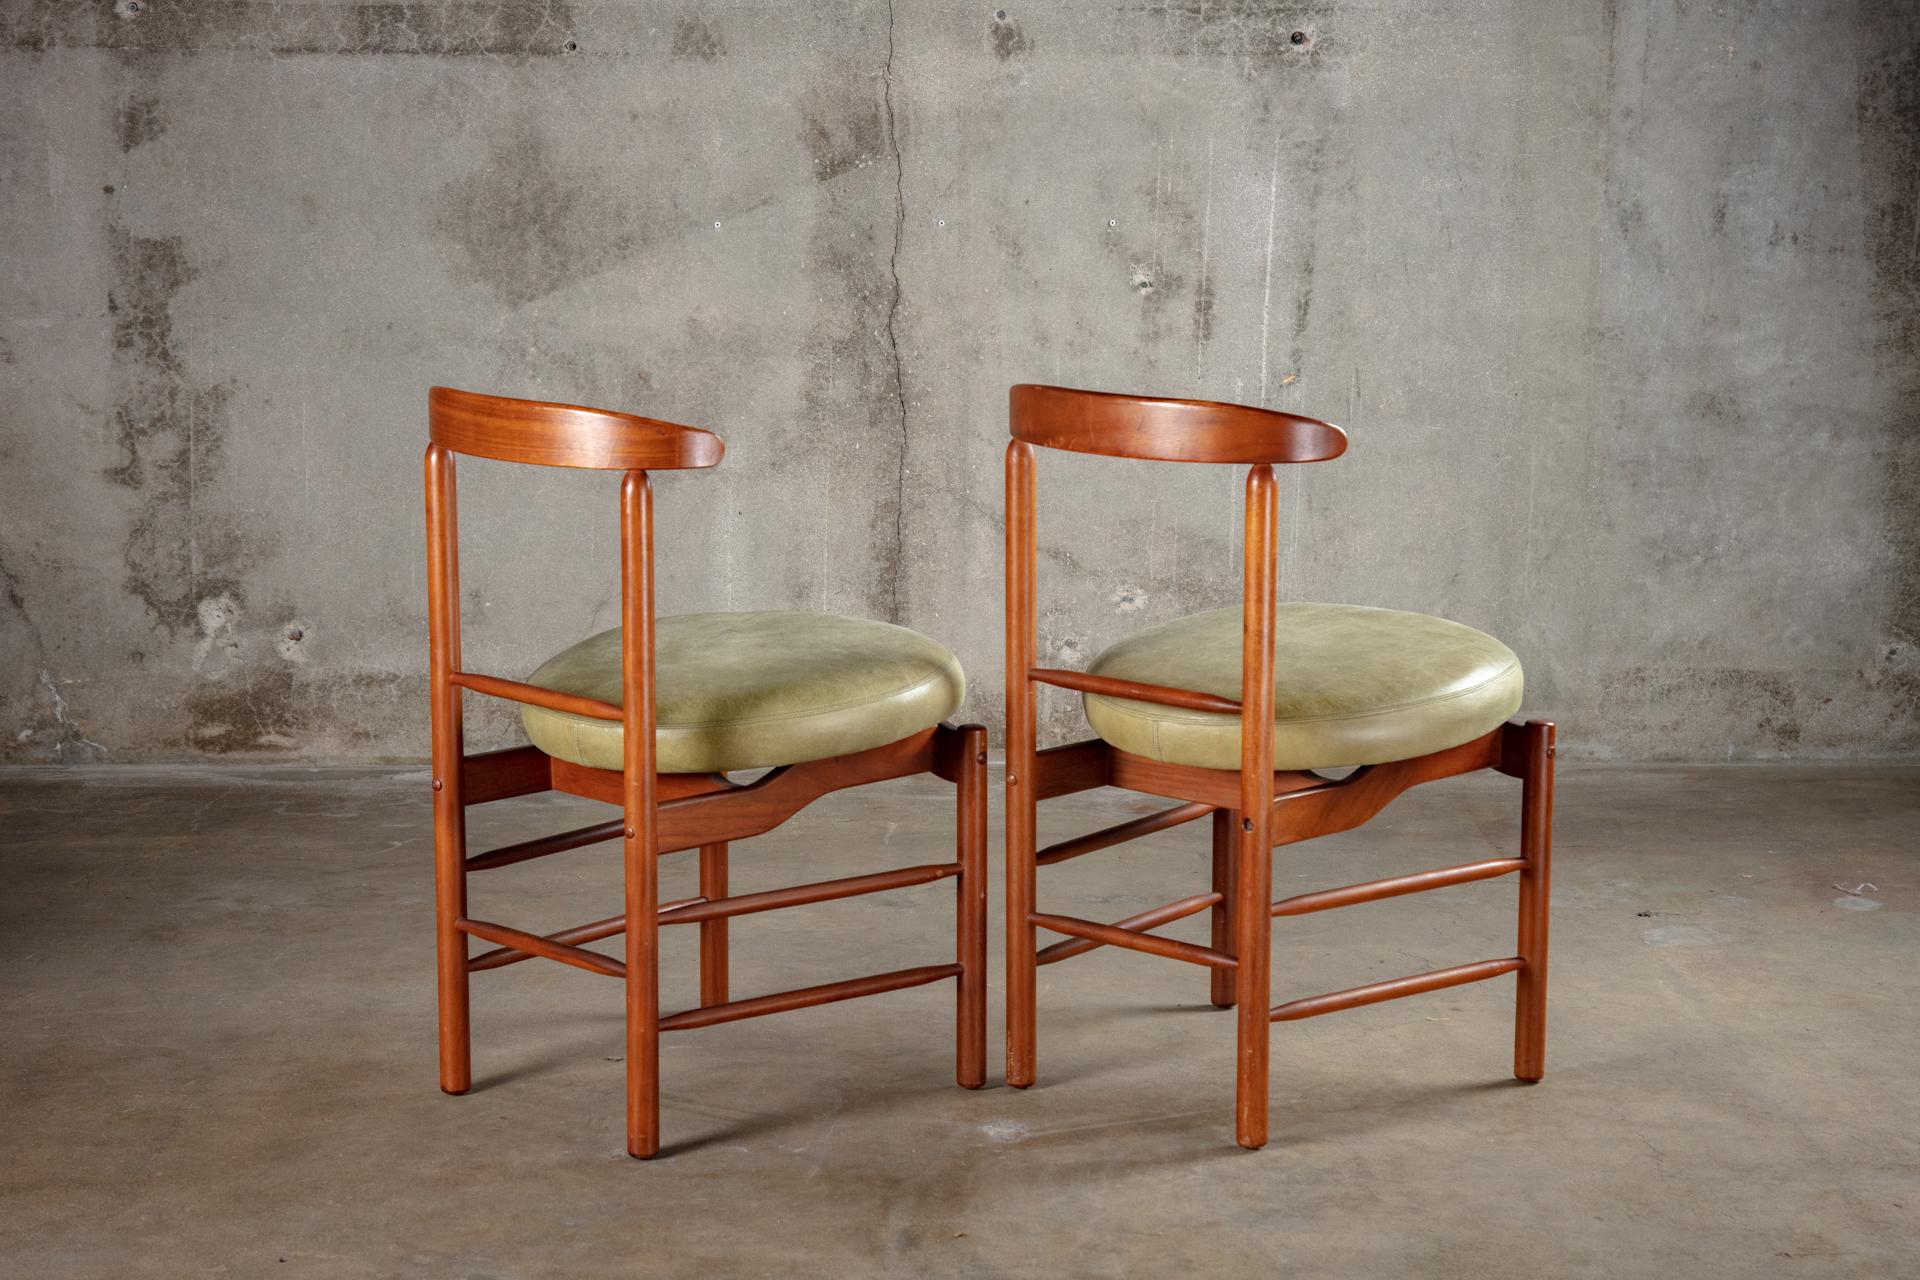 Pair of Glenn of California dining chairs designed by Greta Grossman.